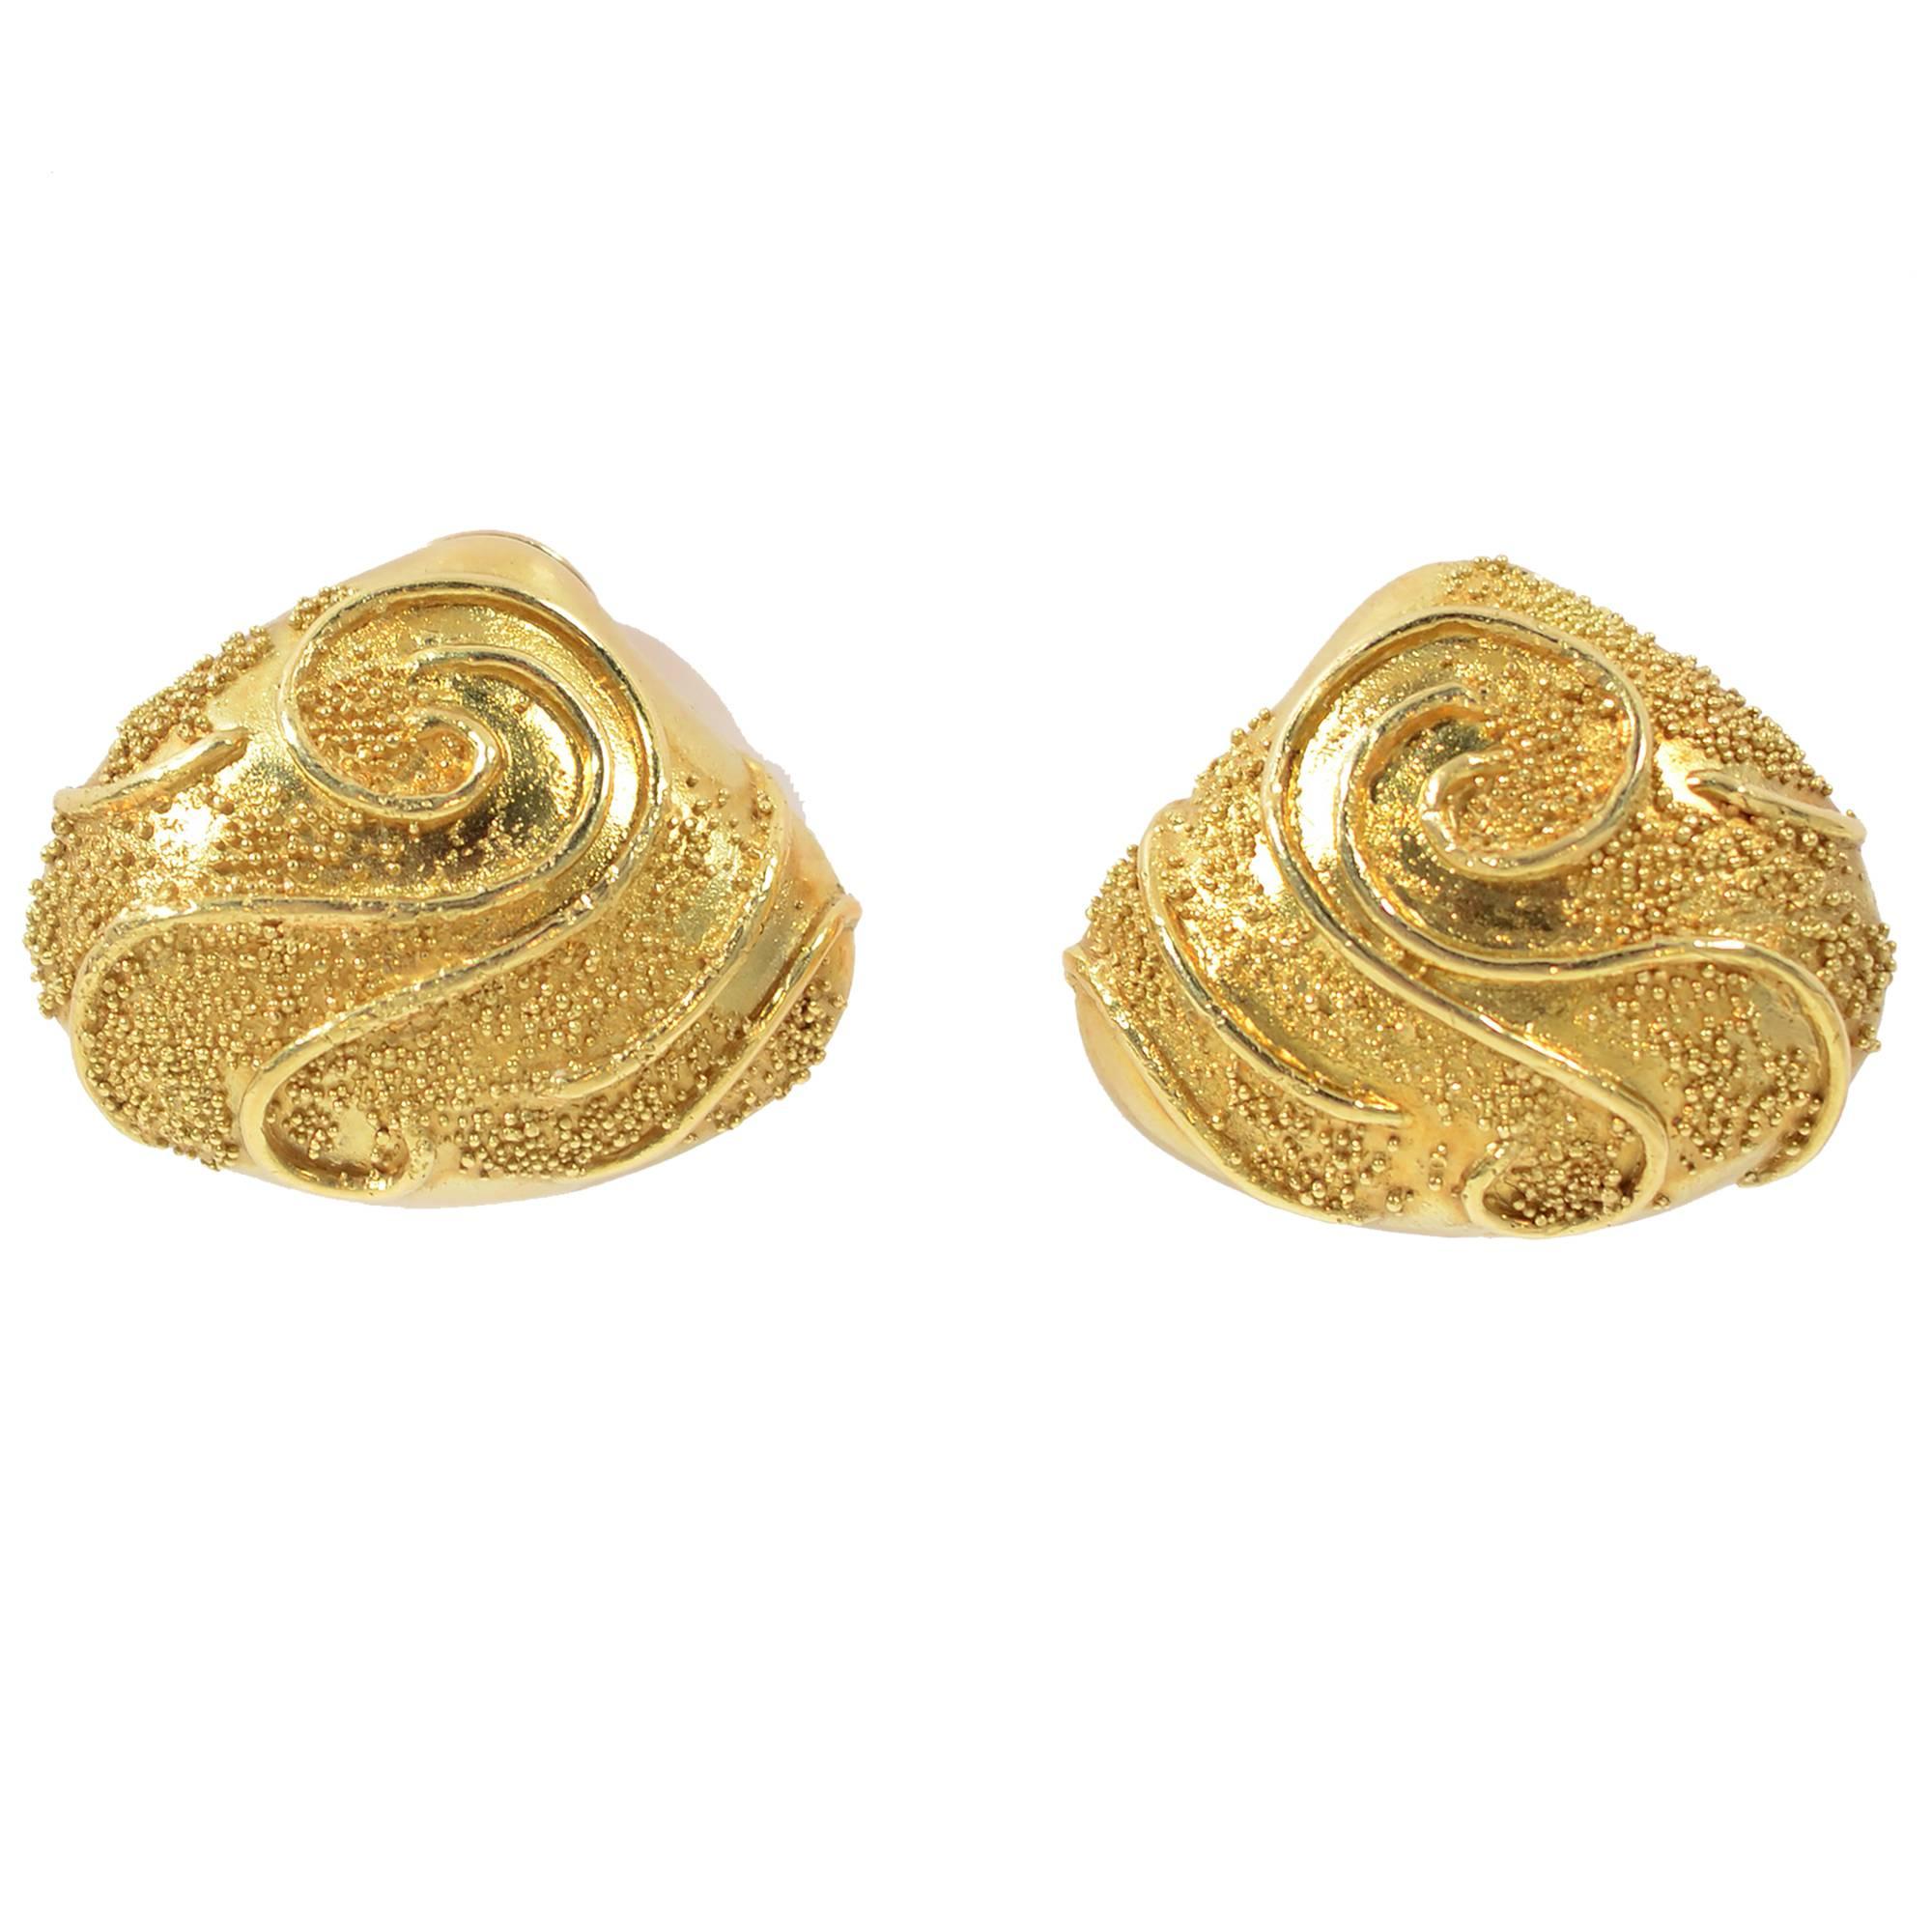 Elizabeth Gage Granulated Gold Earrings For Sale